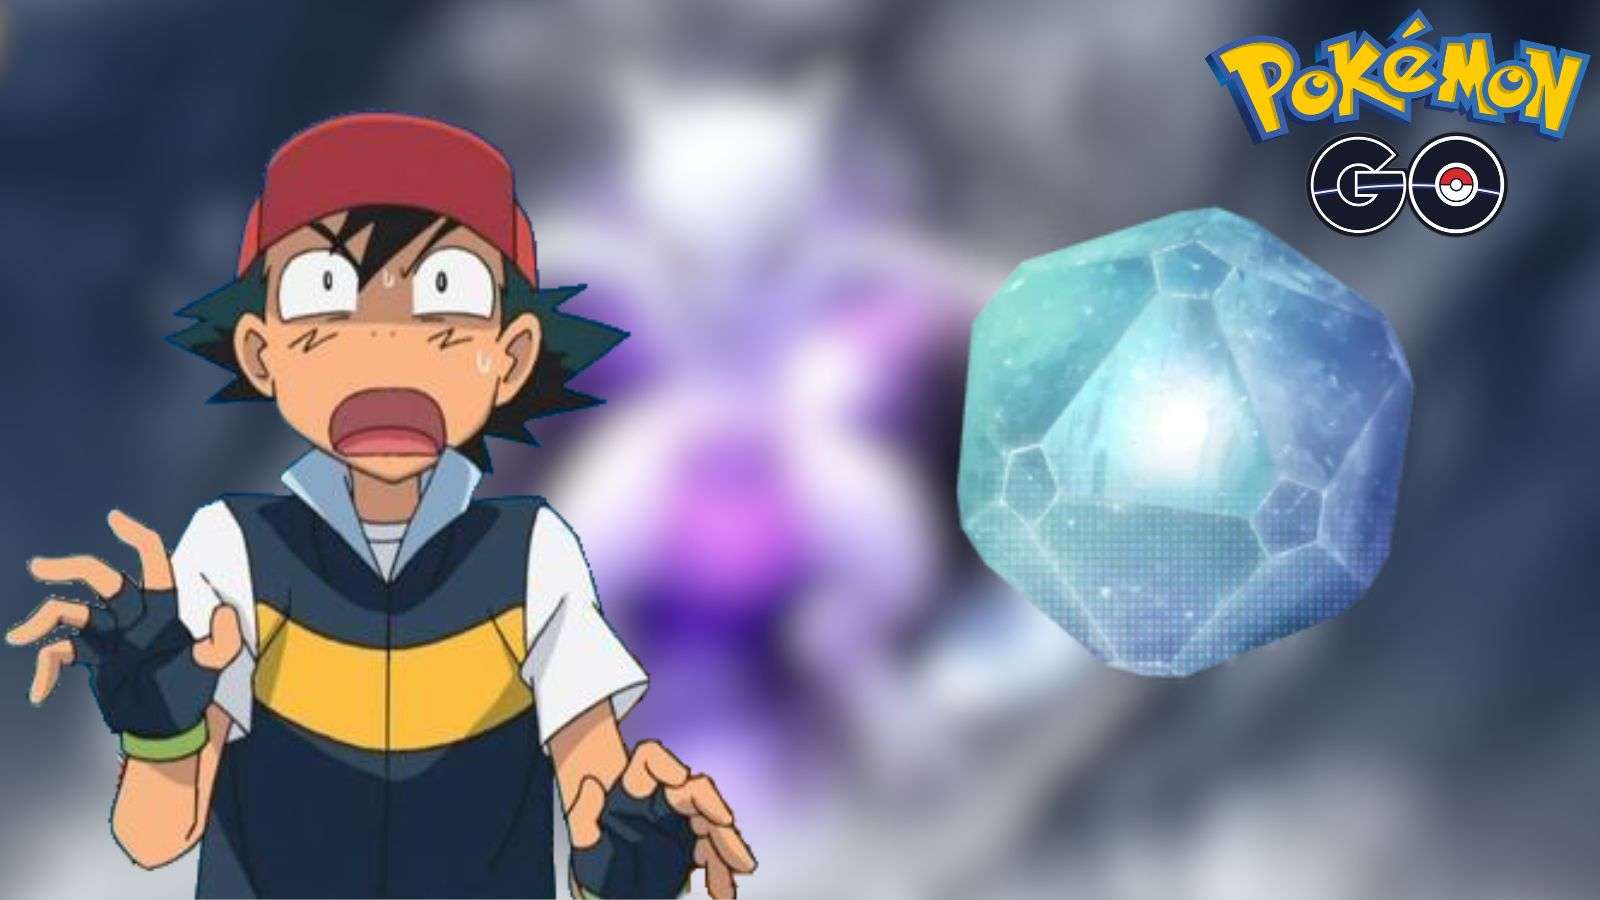 Pokemon Go Purified Gems with a worried Ash Ketchum